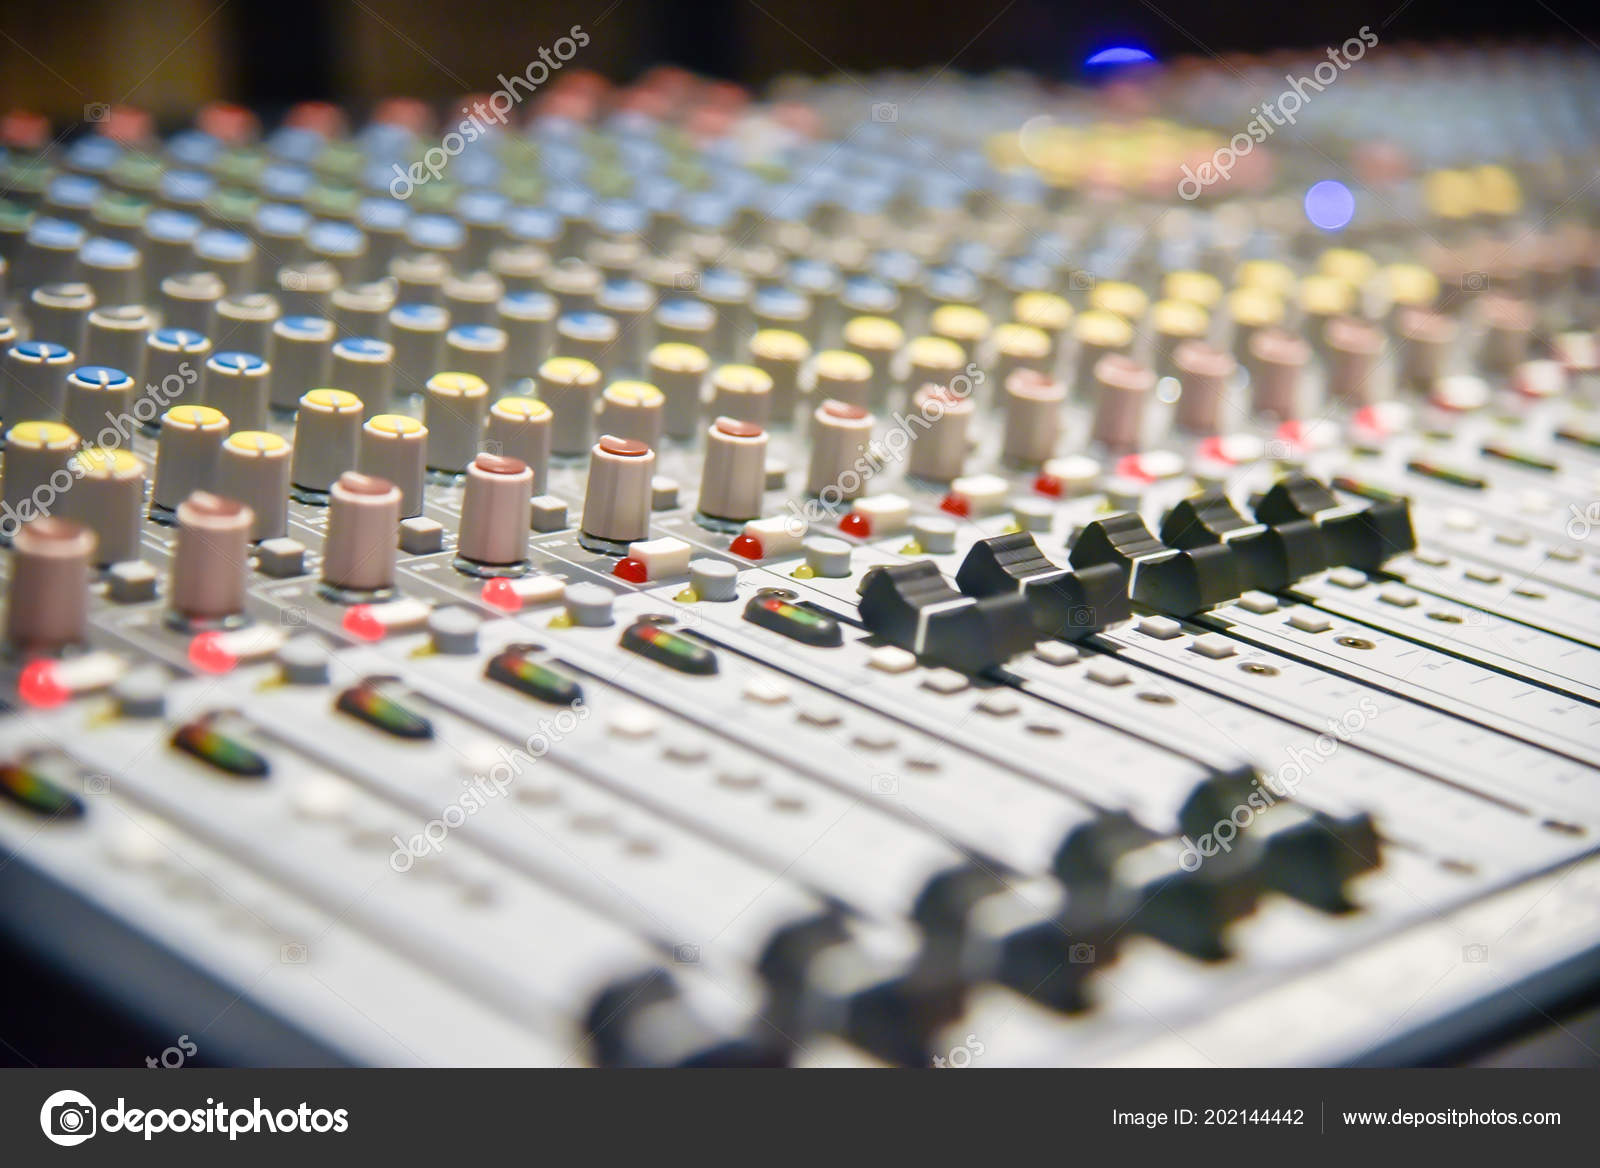 Close Digital Sound Mixer Amplifier Equipment Music Mixer Stock Photo by 202144442